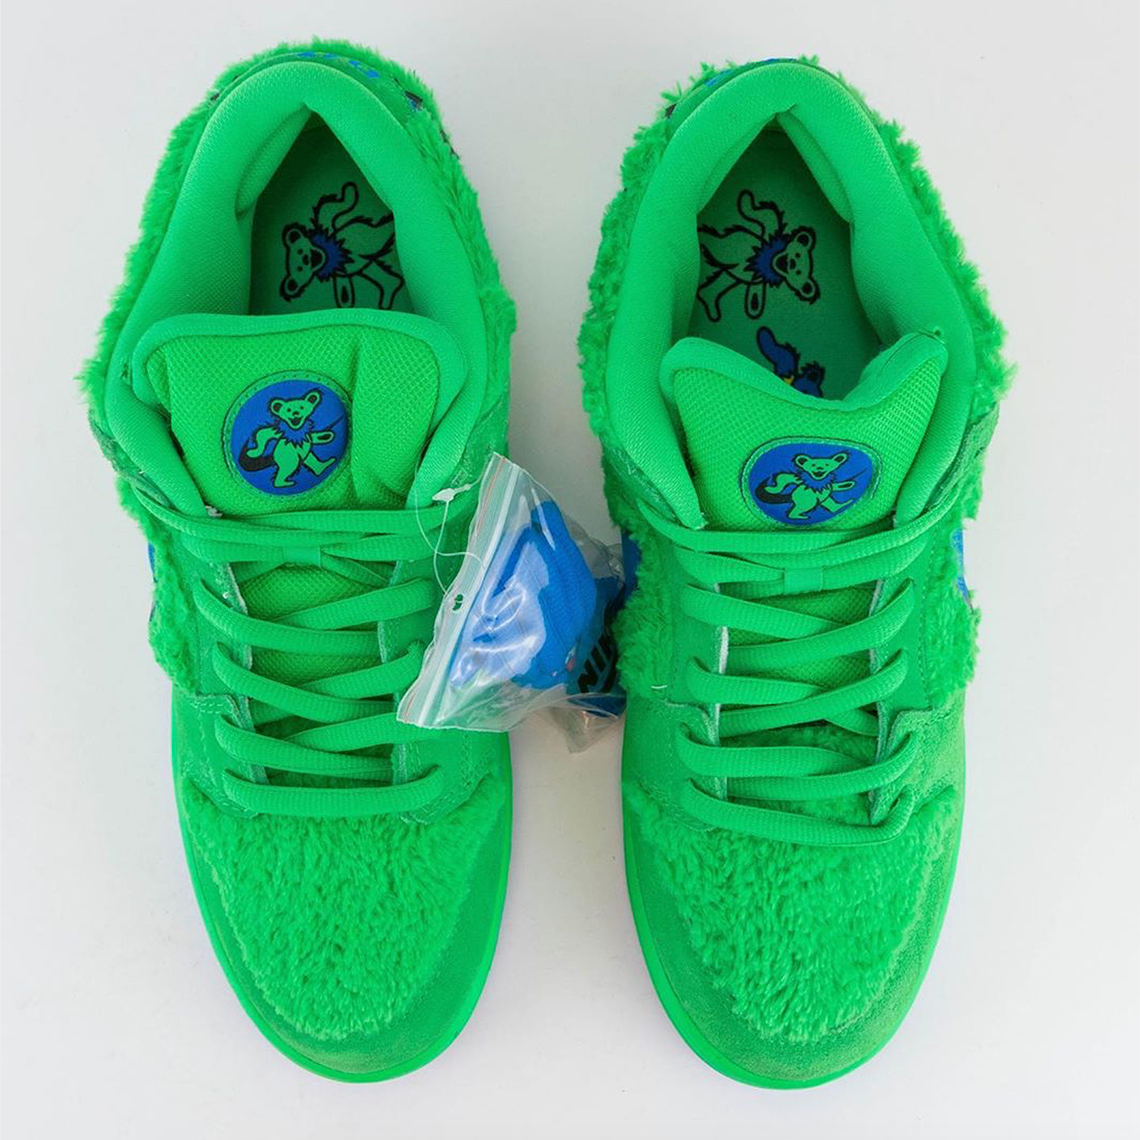 Grateful Dead Nike SB Dunk Green CJ5378-300 | SneakerNews.com